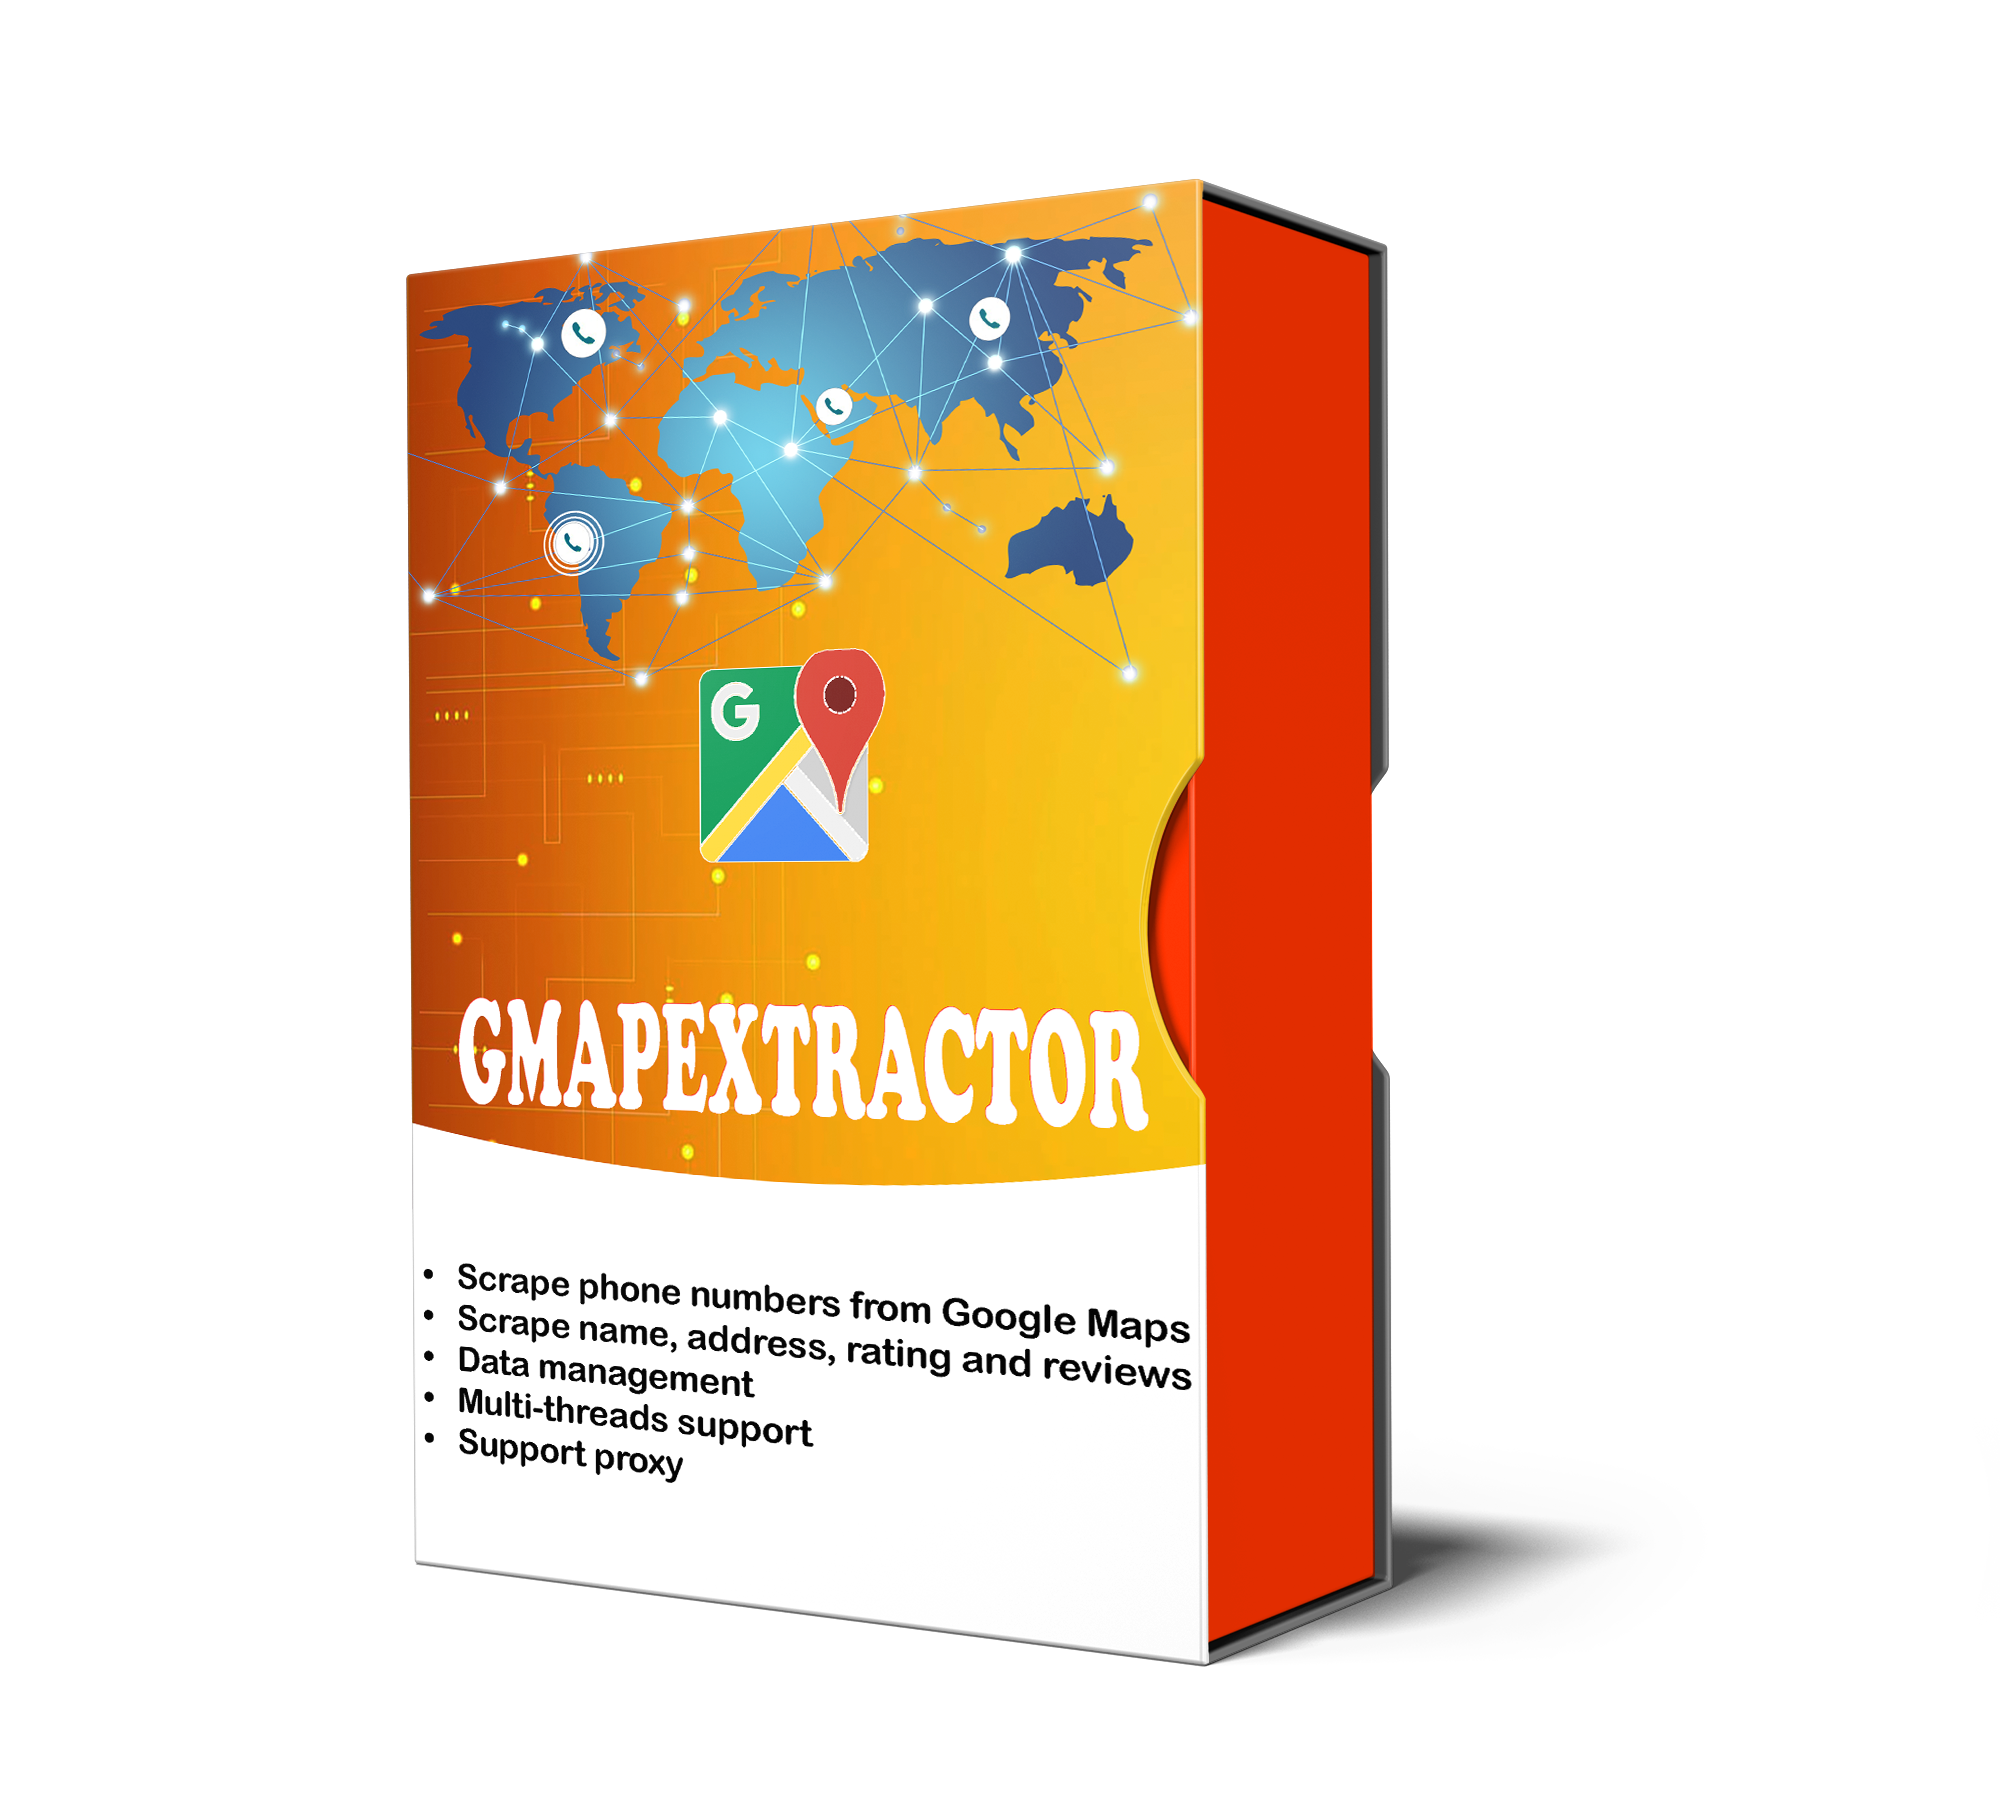 GmapExtractor